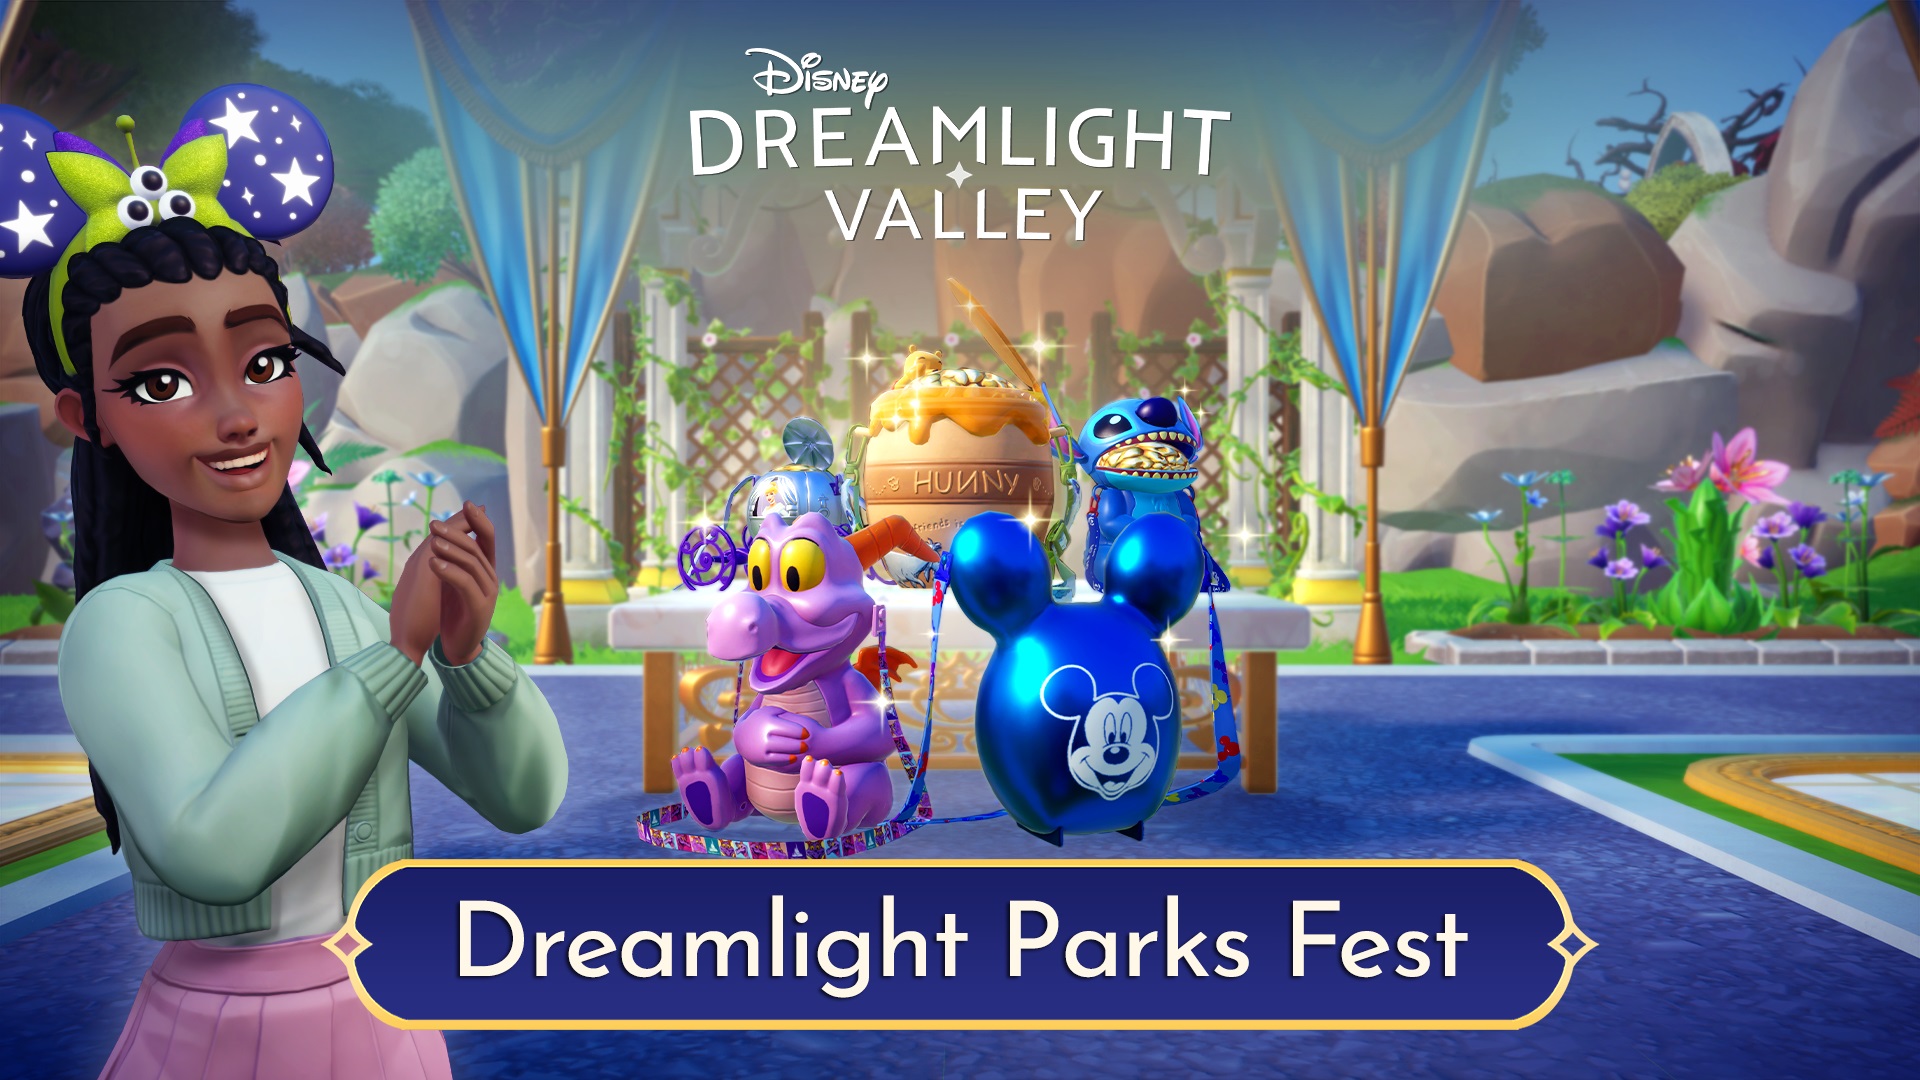 Dreamlight Parks Fest begins in Disney Dreamlight Valley